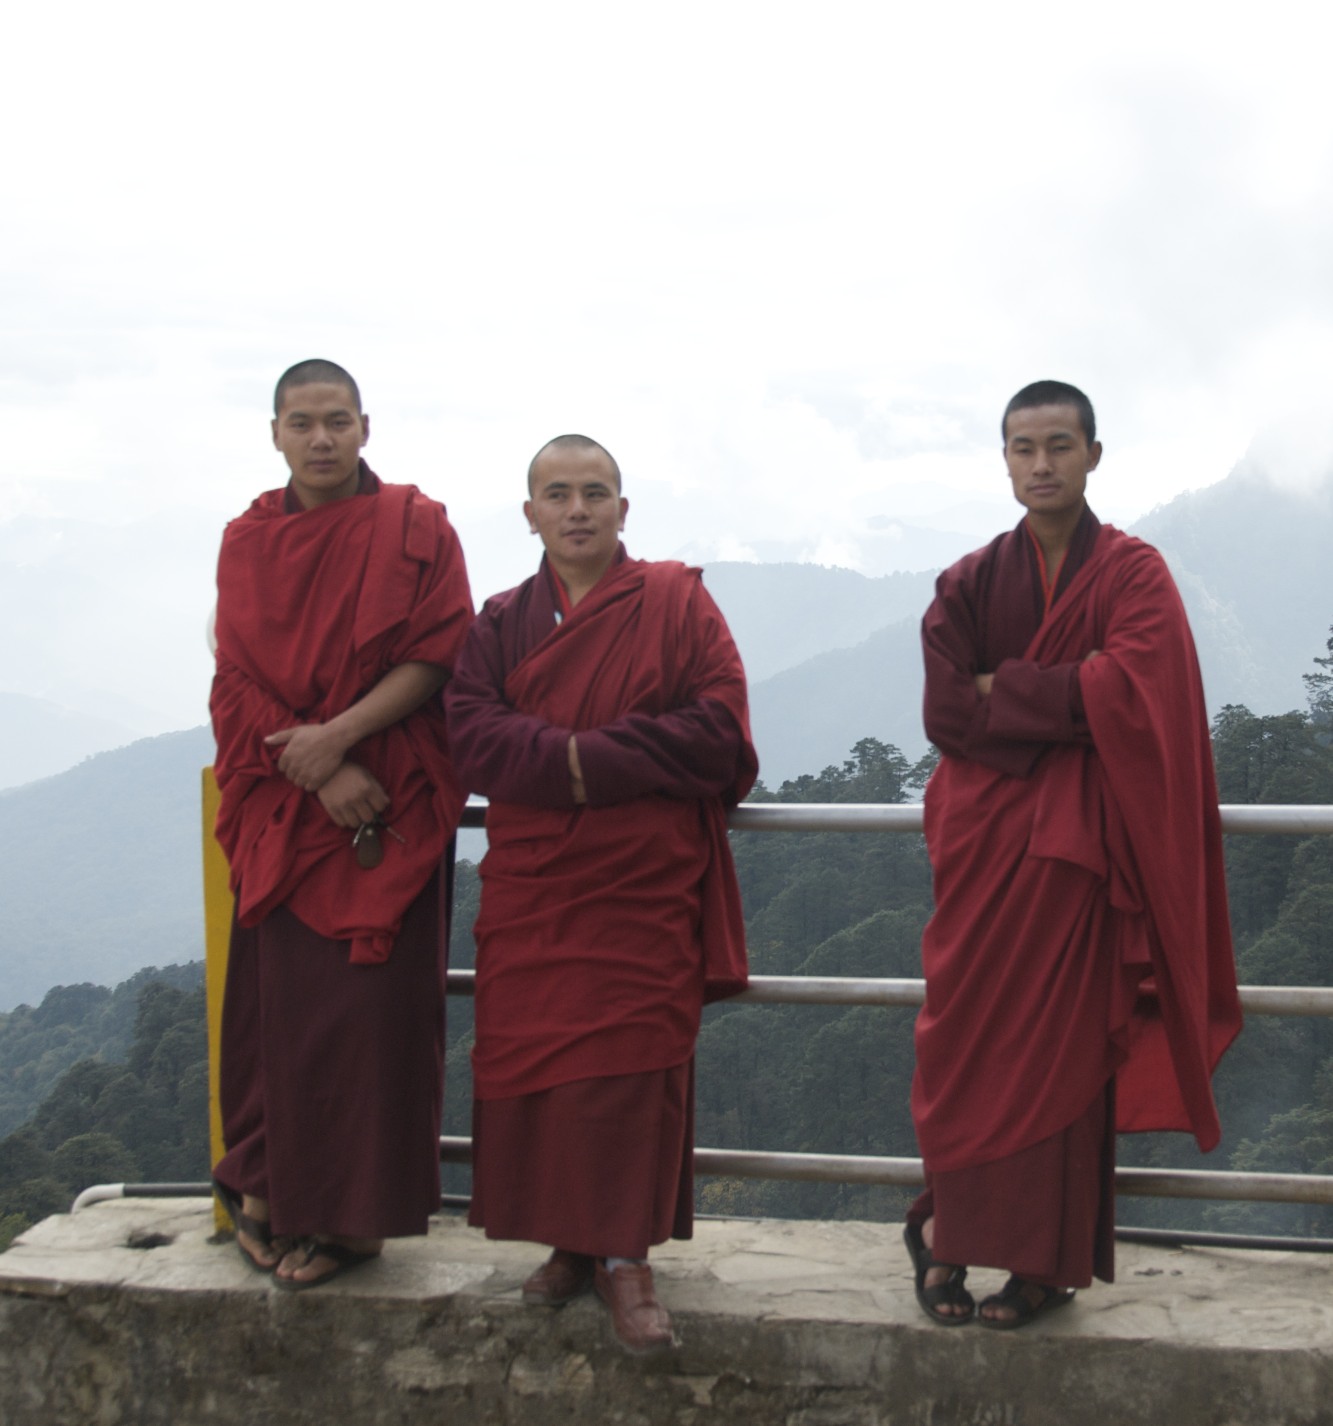 Compassionate Cultures: MONKS IN BHUTAN